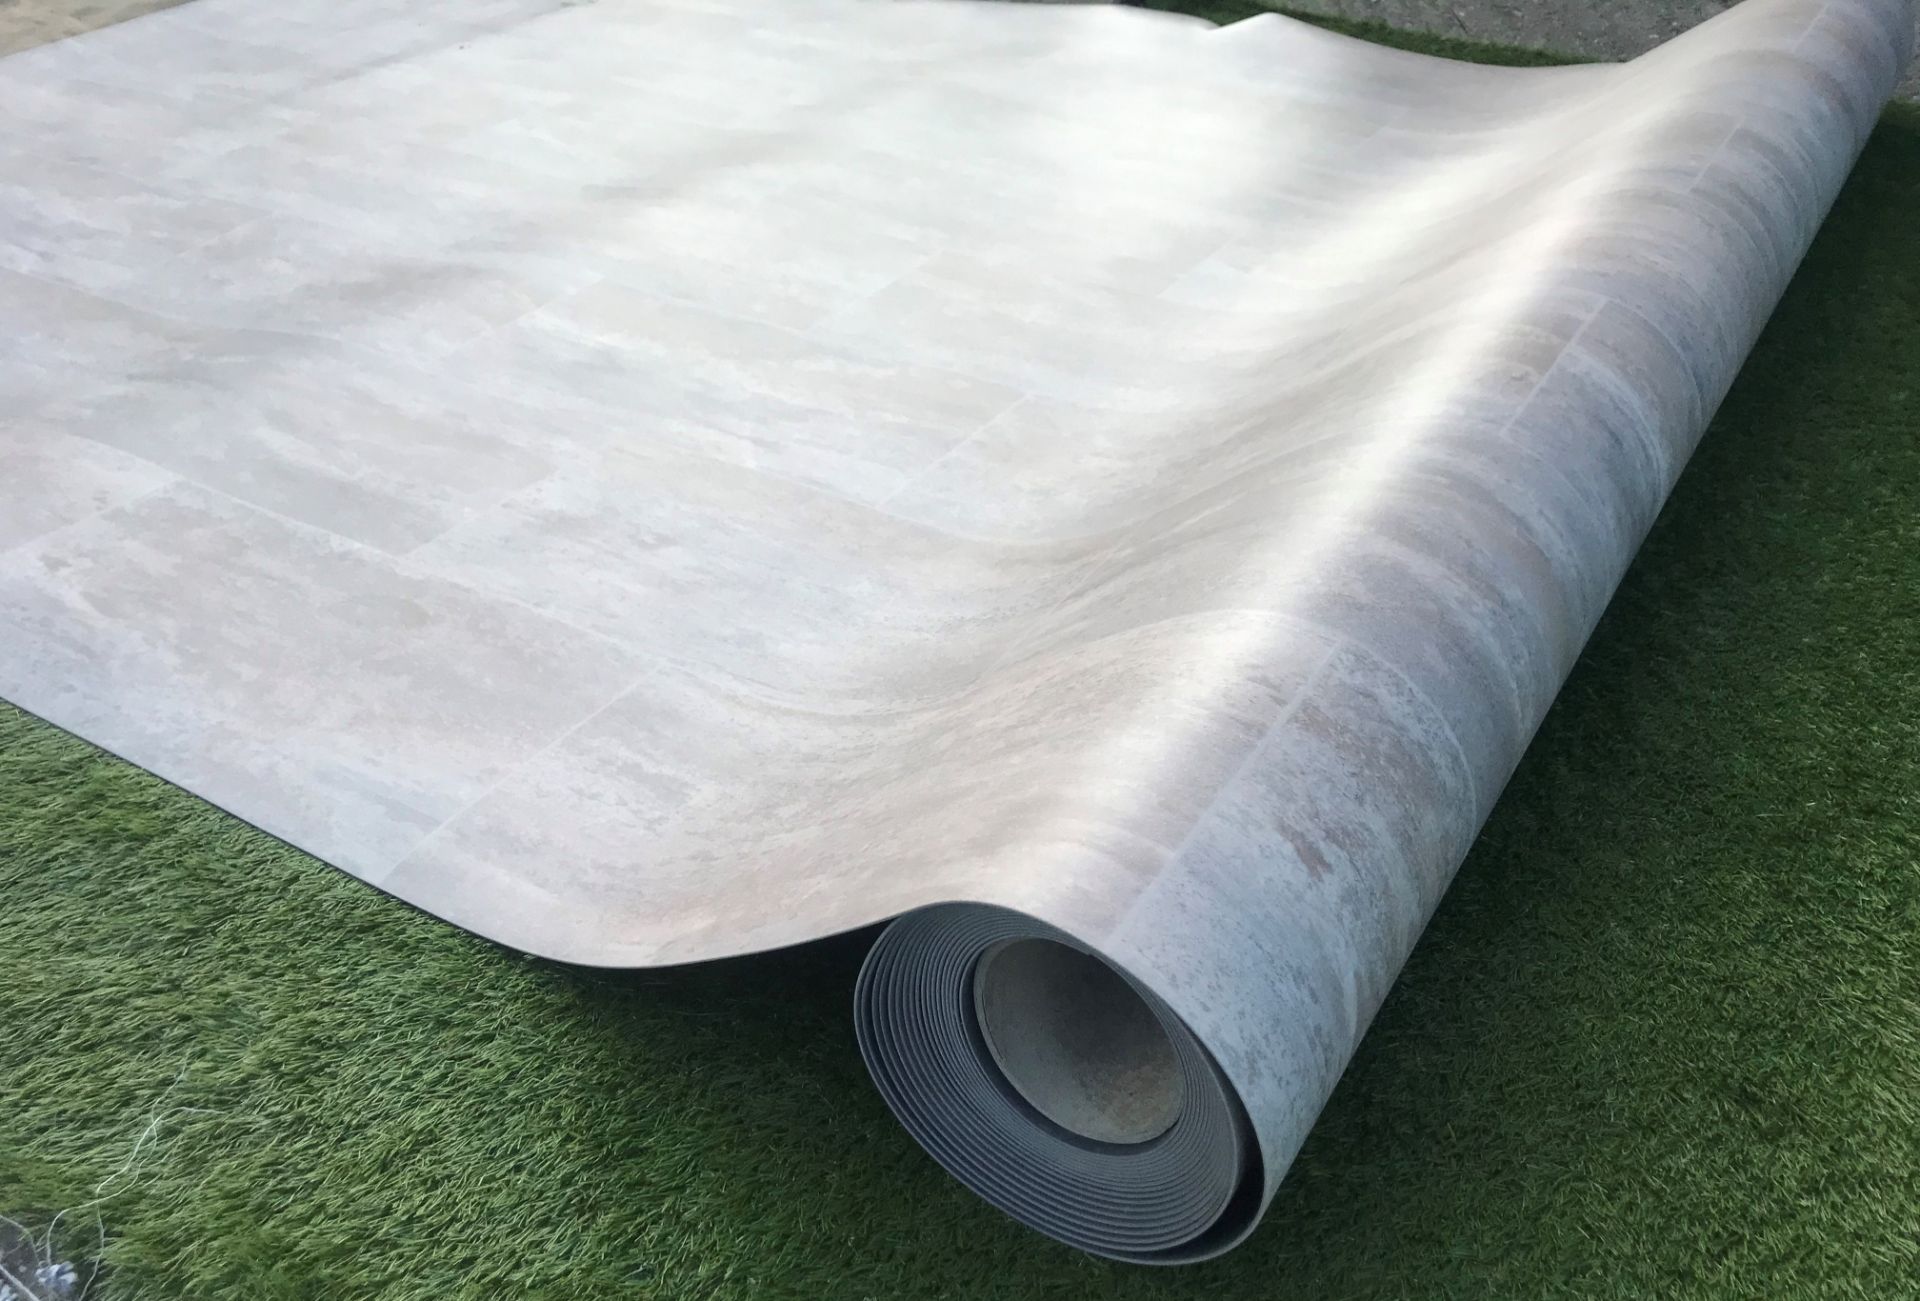 1 x GERFLOR Tarkett Commercial Safety Flooring In Melbourne Tile Design - 10.8X2 Meter Roll - Ref: - Image 2 of 4